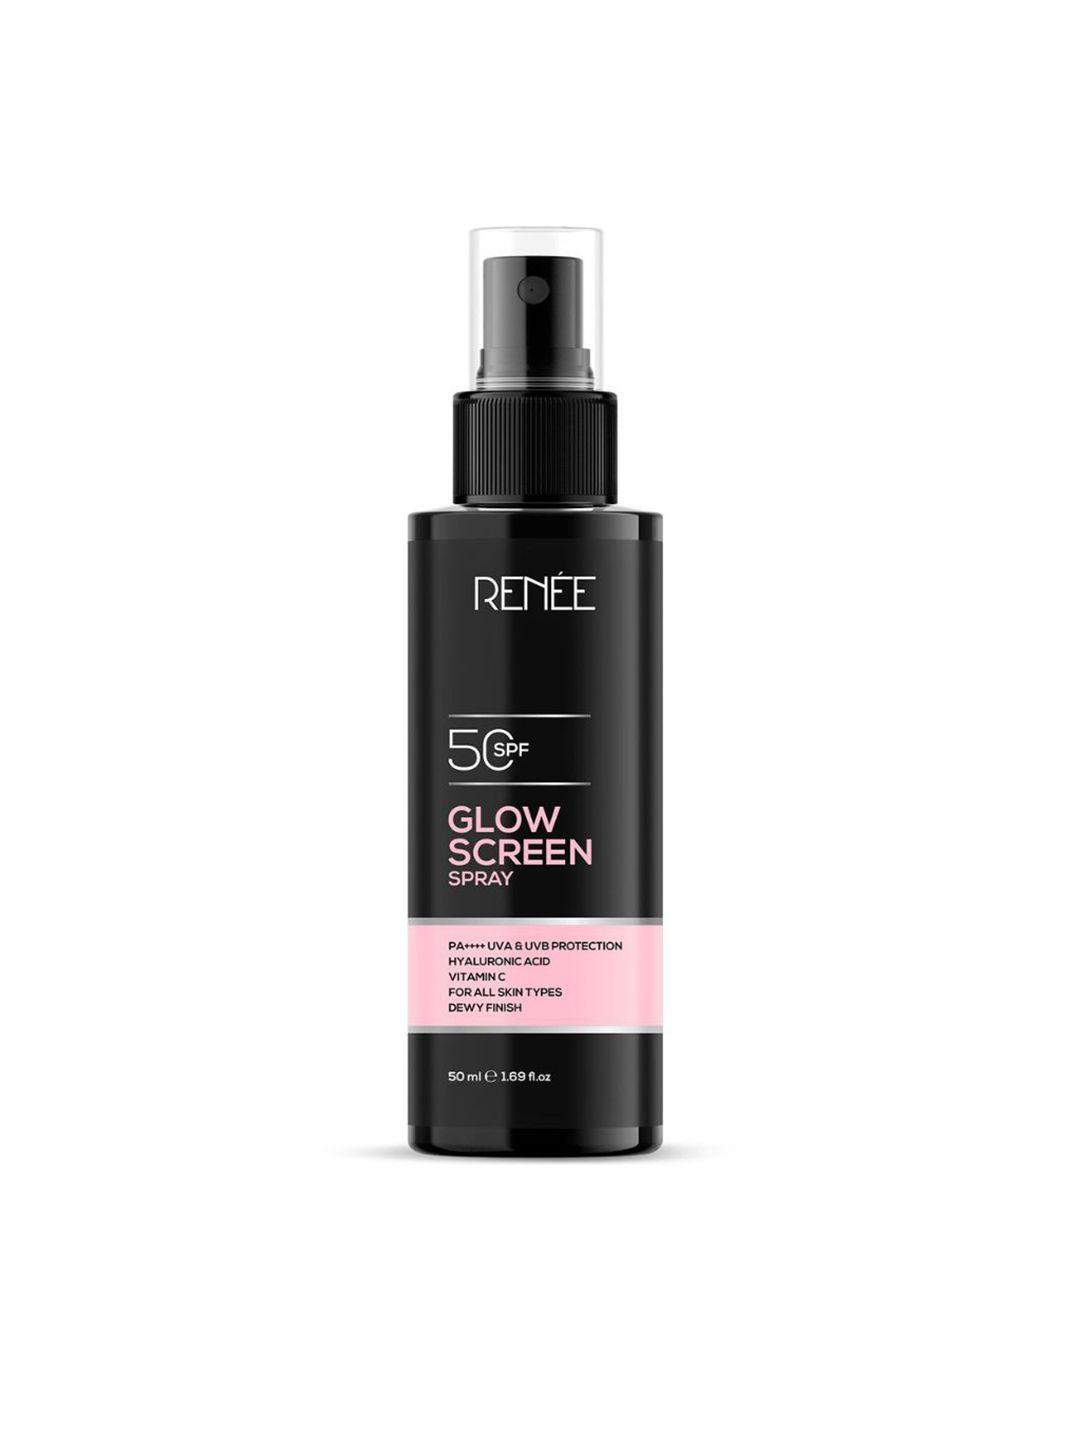 Renee Glowscreen SPF 50 Sunscreen Spray - 50ml